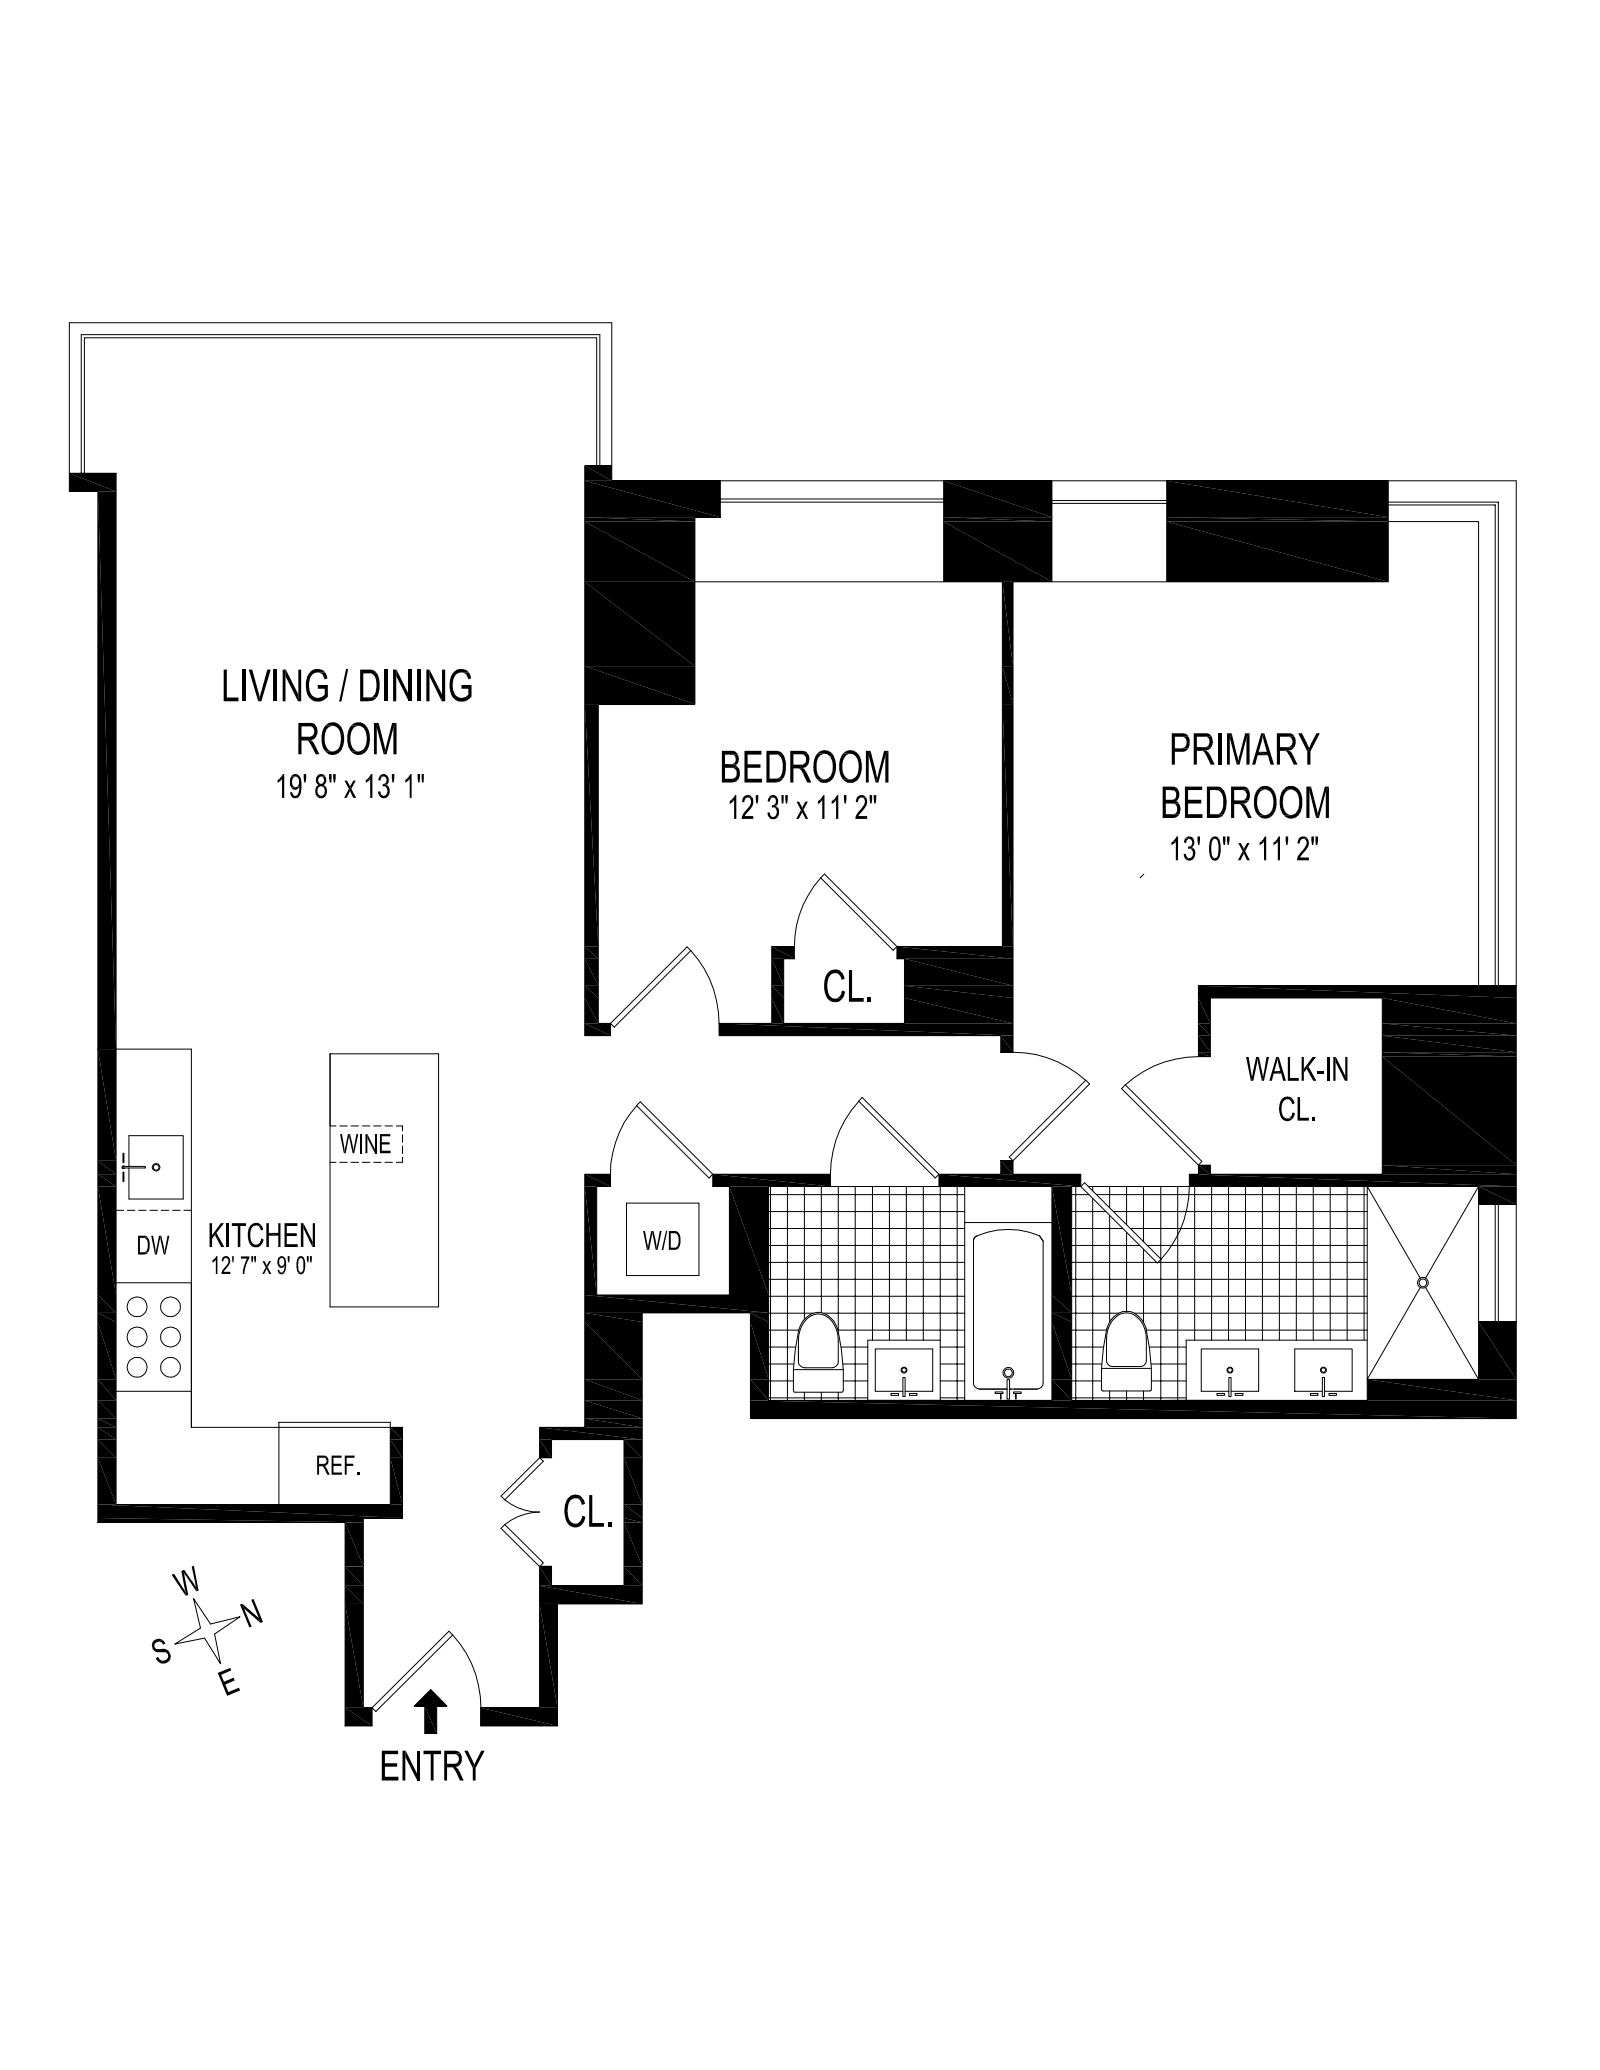 Floorplan for 50 West 30th Street, 9A